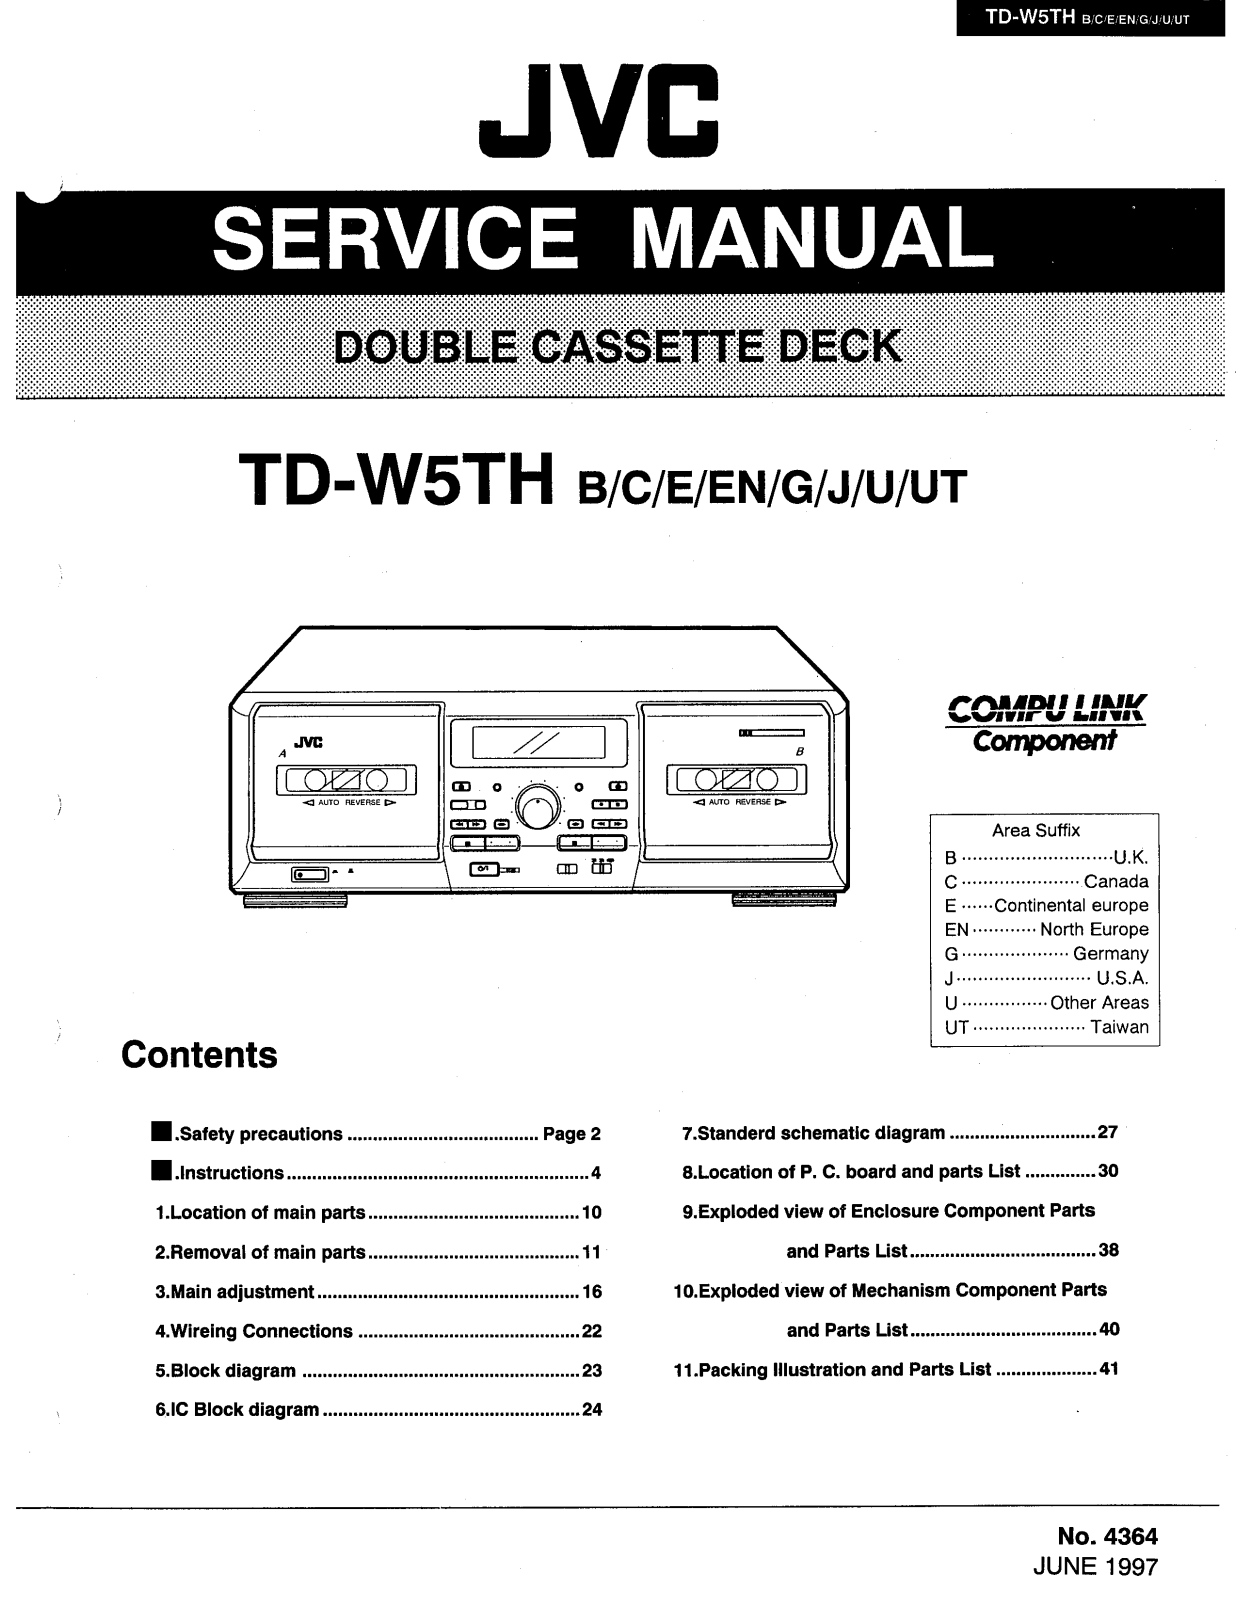 JVC TD-W5THB, TD-W5THE, TD-W5THEN, TD-W5THG, TD-W5THJ Service Manual